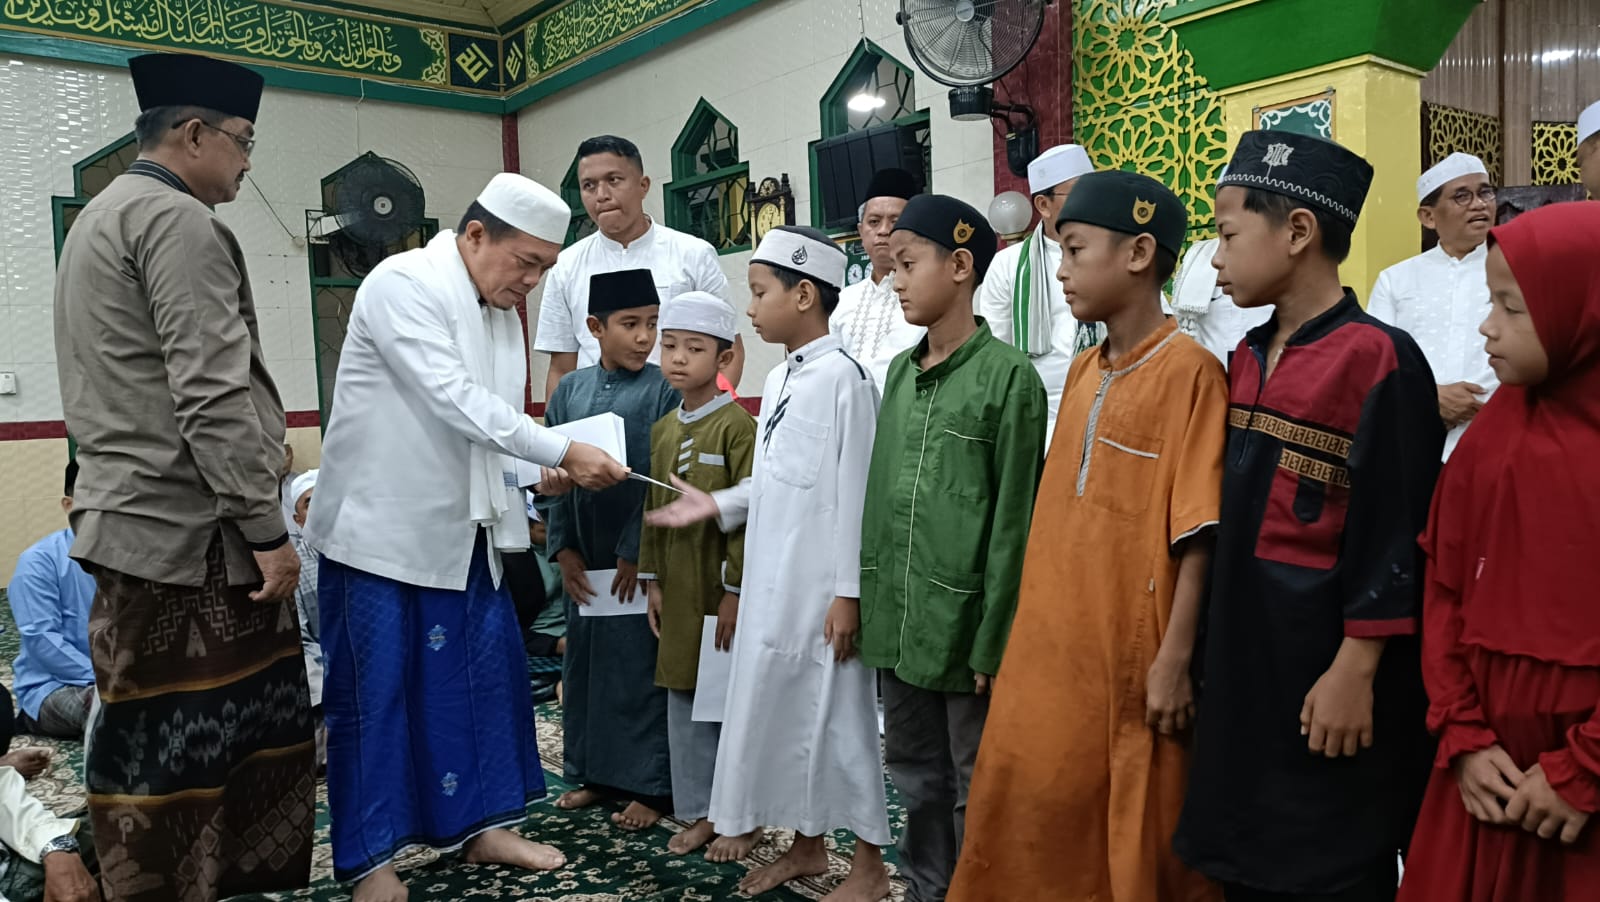 Gubernur Jambi Al Haris Safari Subuh di Masjid Raya Al-Muttaqin Kuala Tungkal